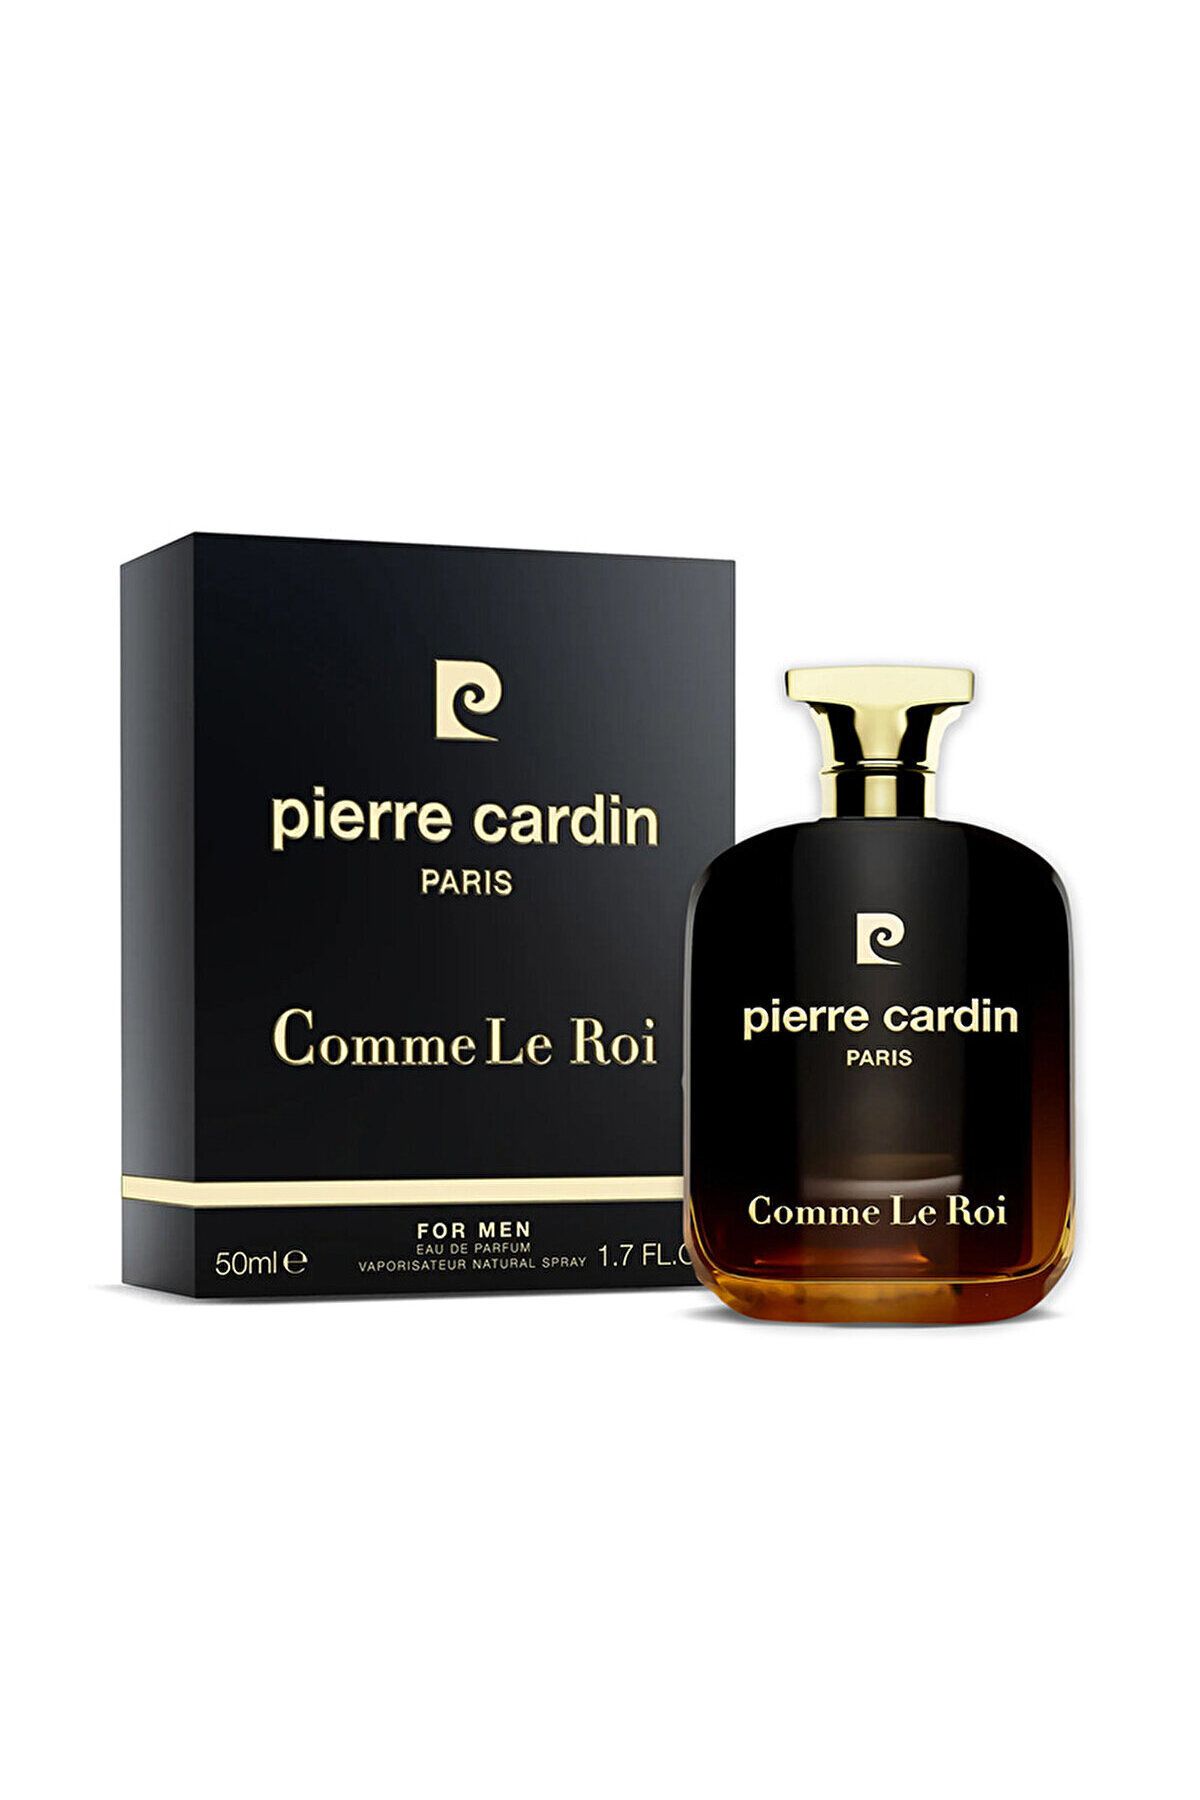 Pierre Cardin WOODY VIP MEN'S PERFUME 50ML